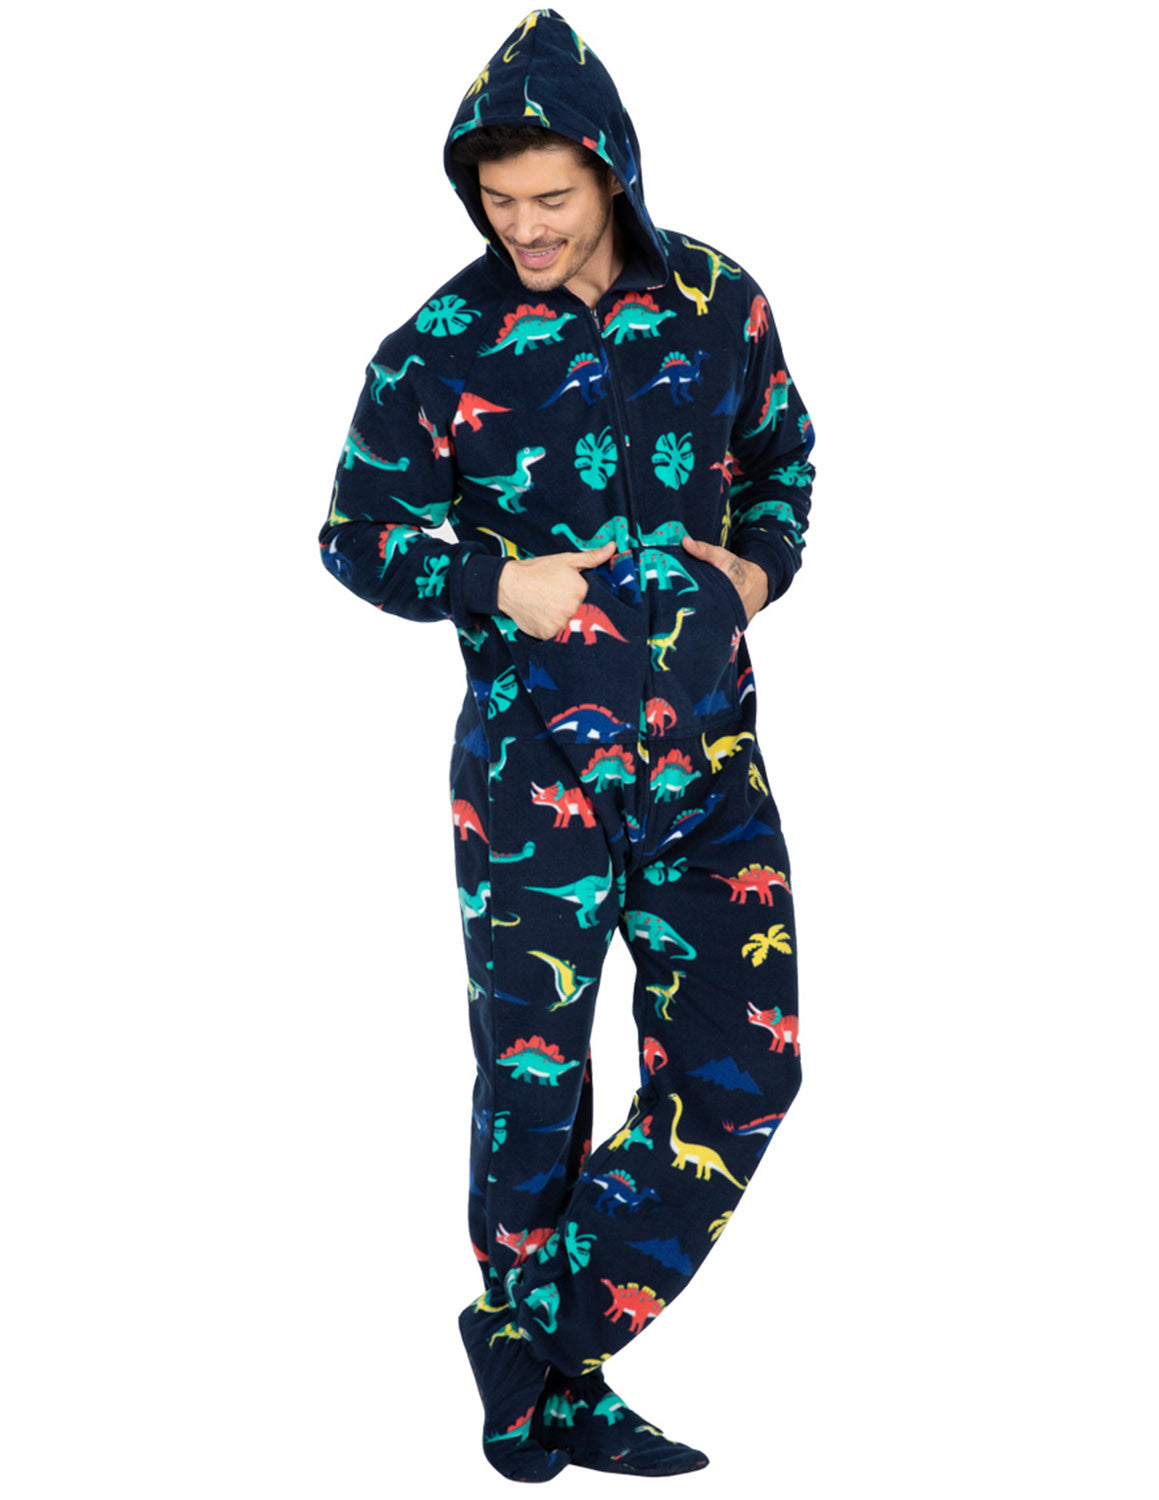 Footie Sprites Pajamas For the whole family 